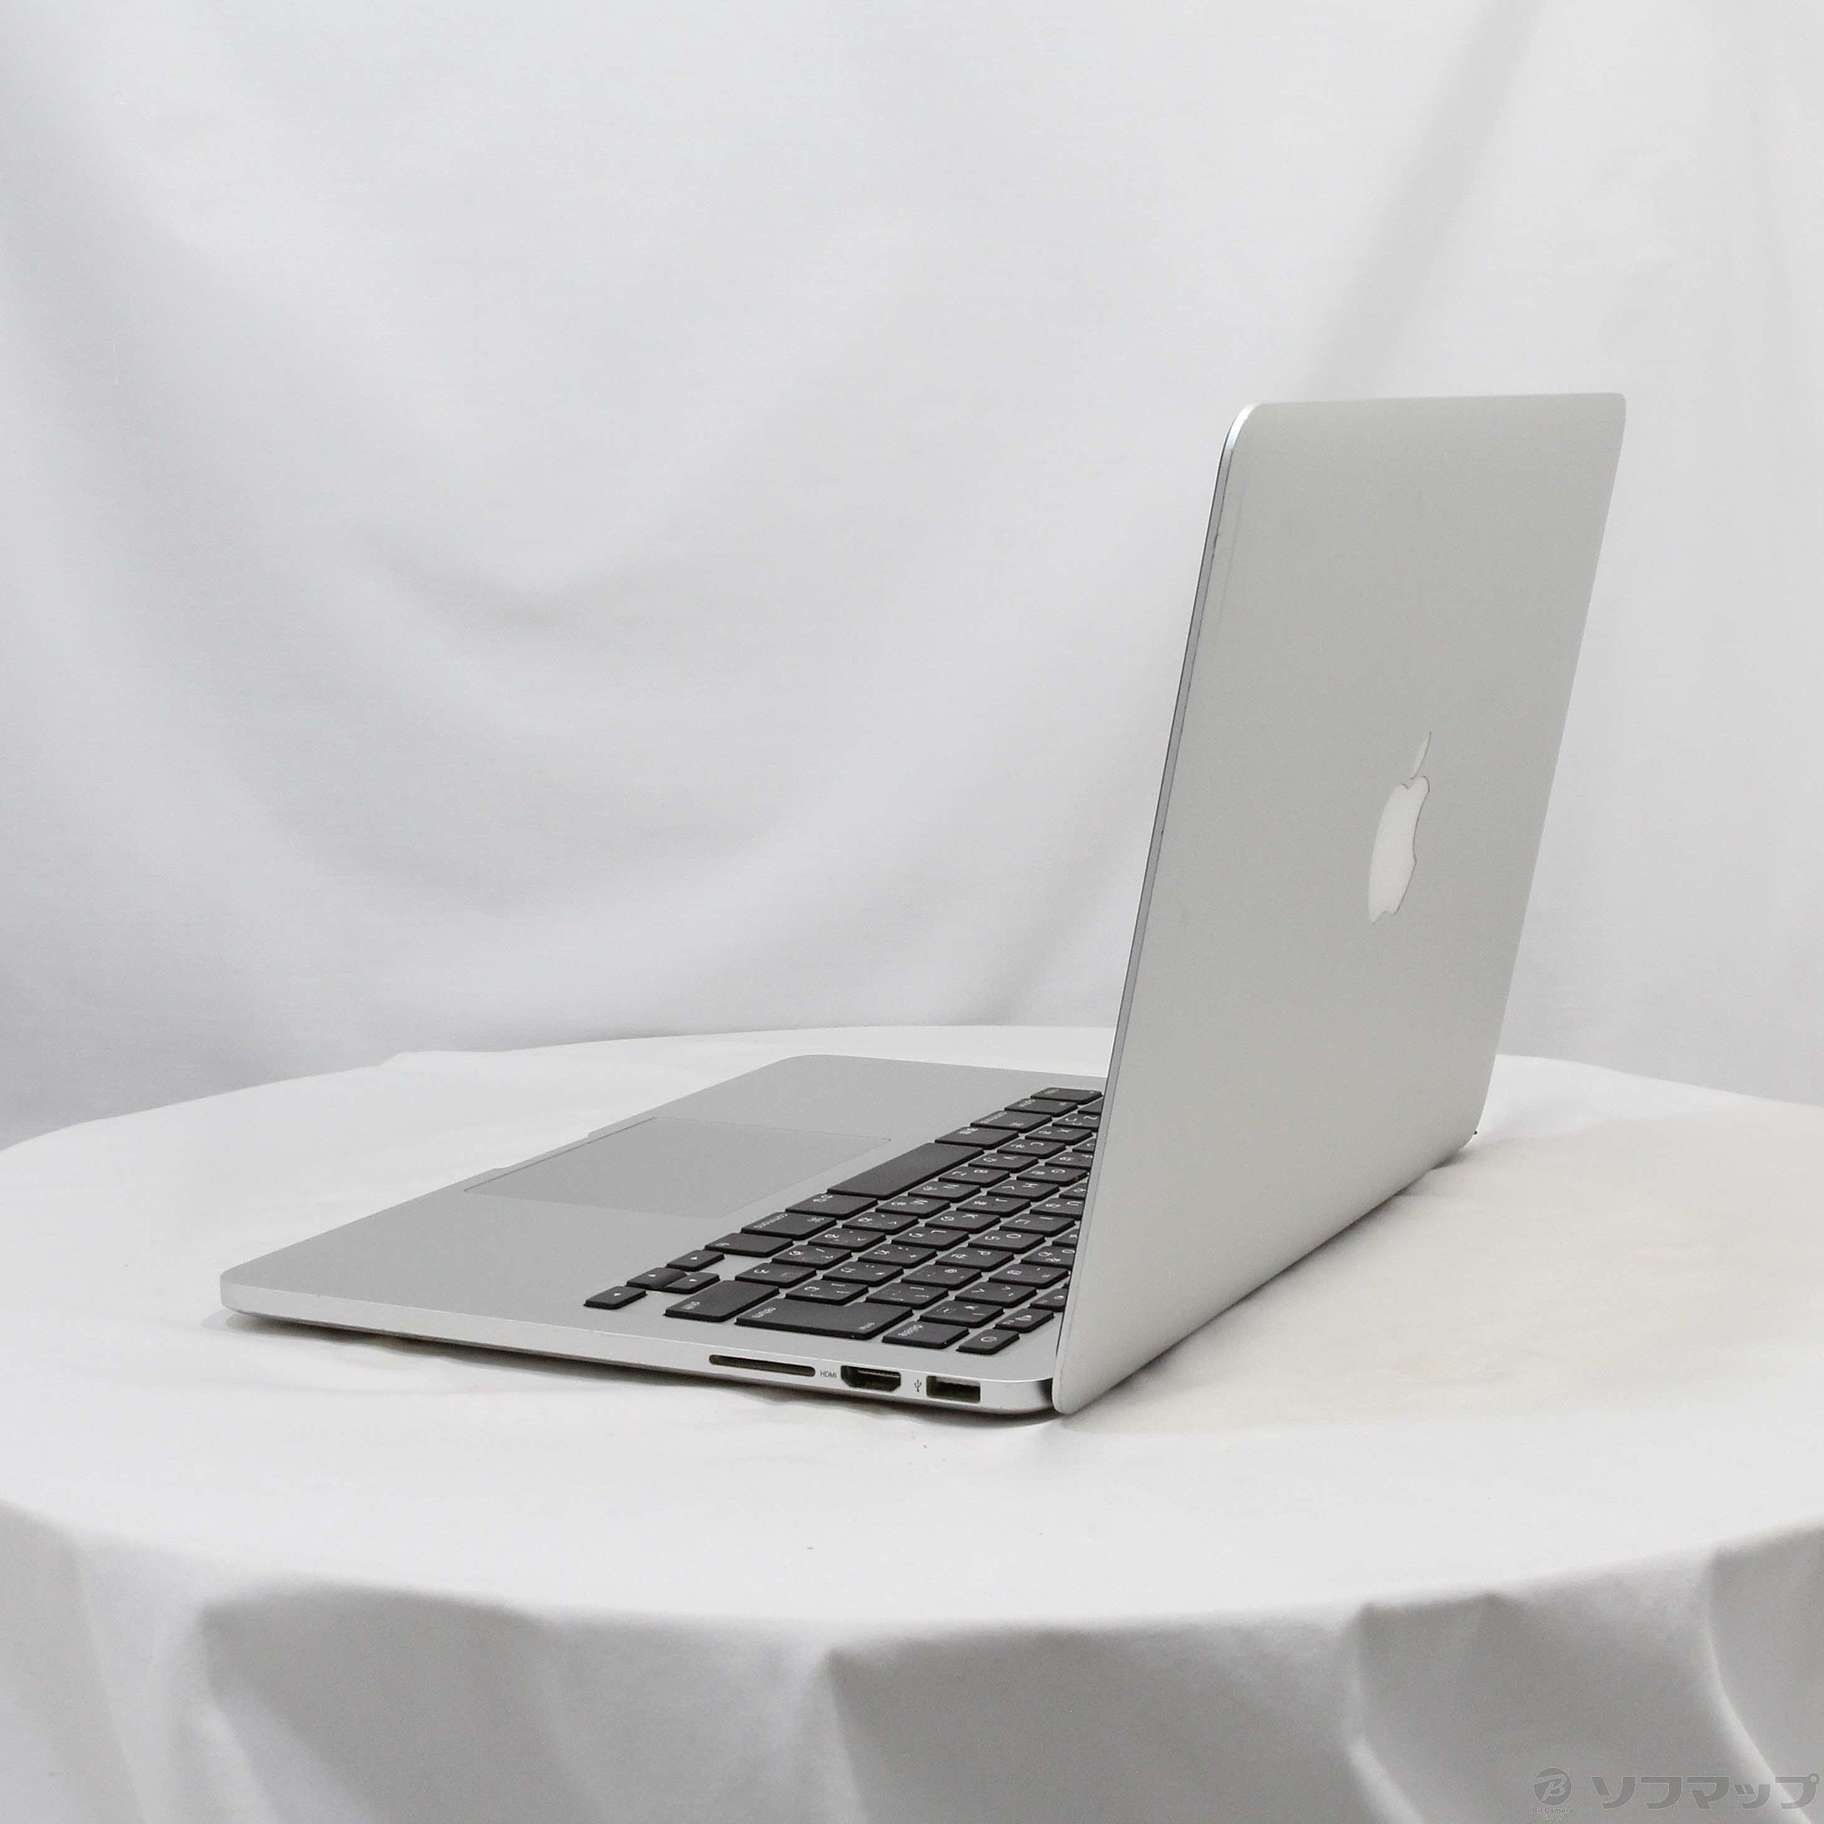 AppleAPPLE MacBook Pro MACBOOK PRO MF840J/A